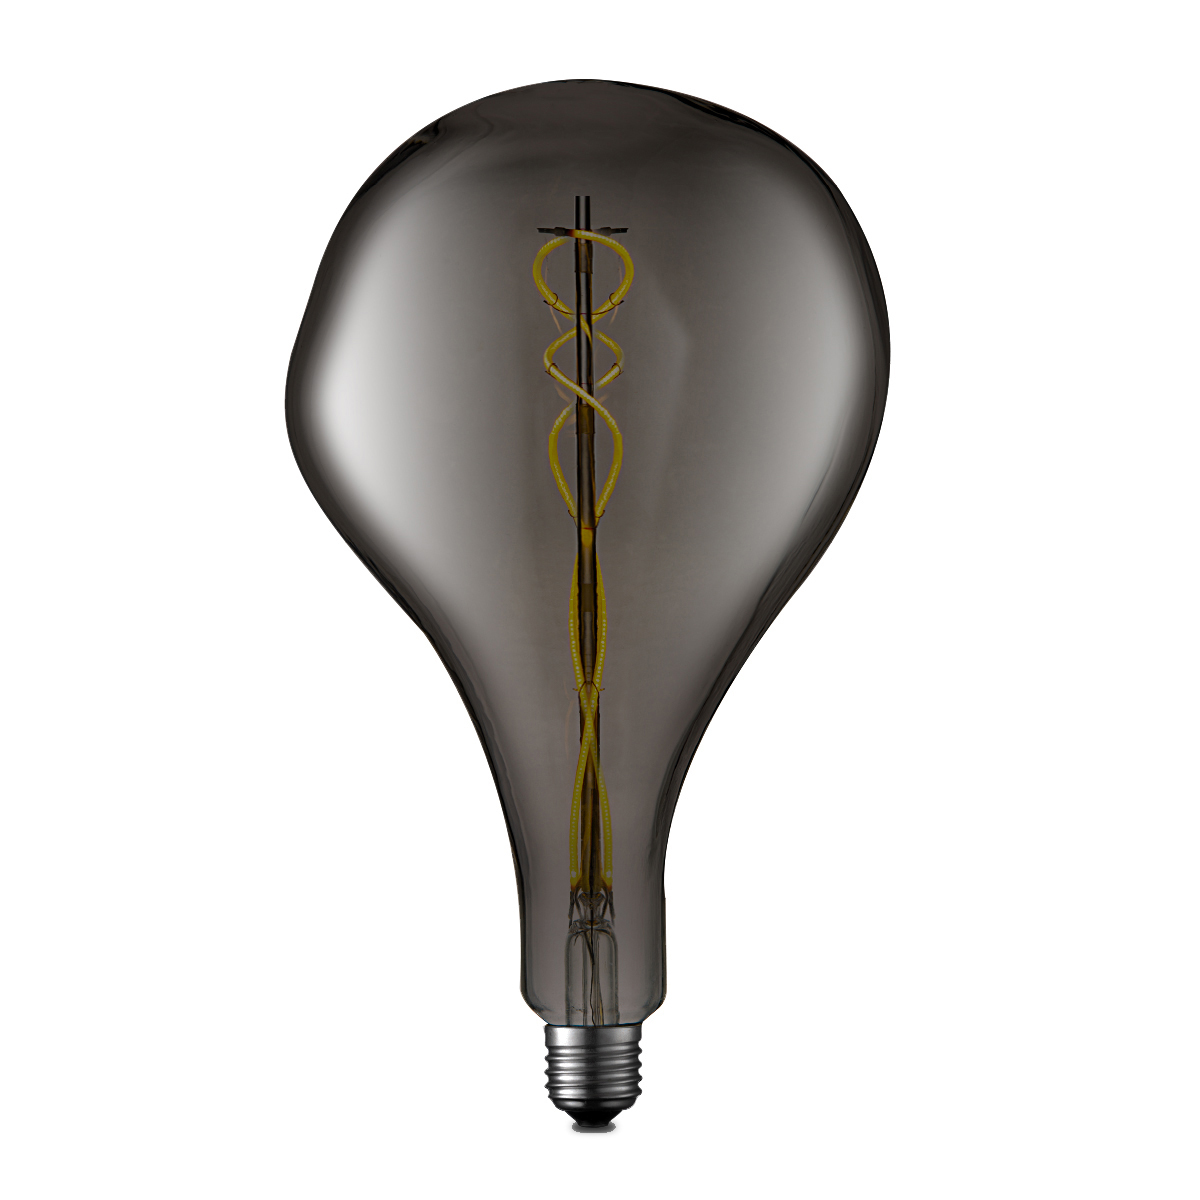 Tangla lighting - TLB-8045-06TM - LED Light Bulb Double Flex filament - special 4W titanium - bubbles - dimmable - E27